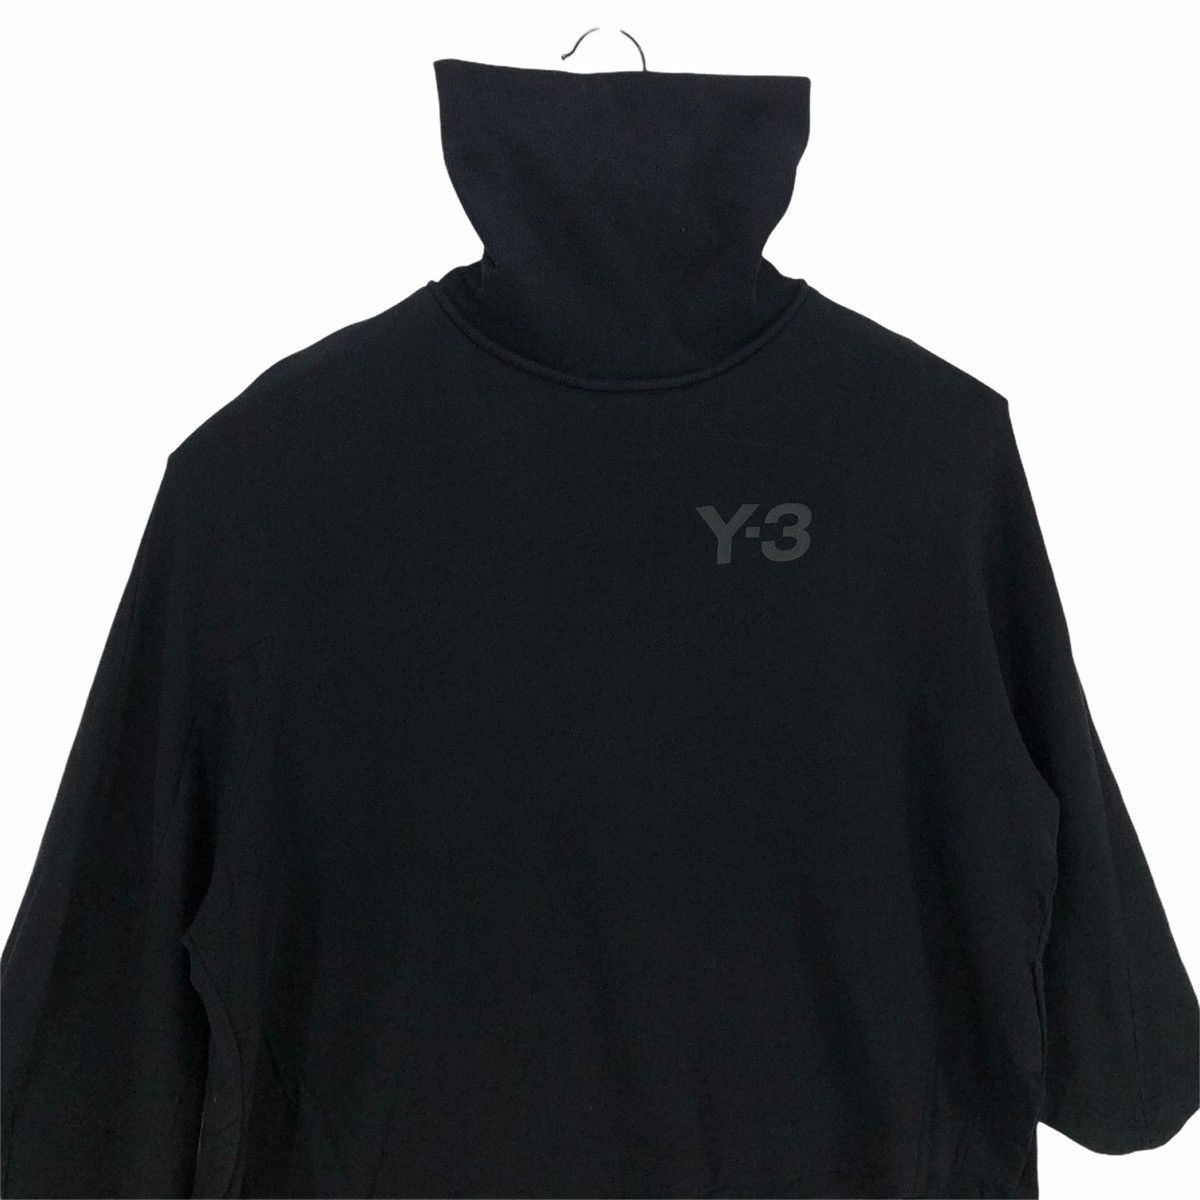 Adidas Yohji Yamamoto Y-3 Pullover Size US M / EU 48-50 / 2 - 4 Thumbnail